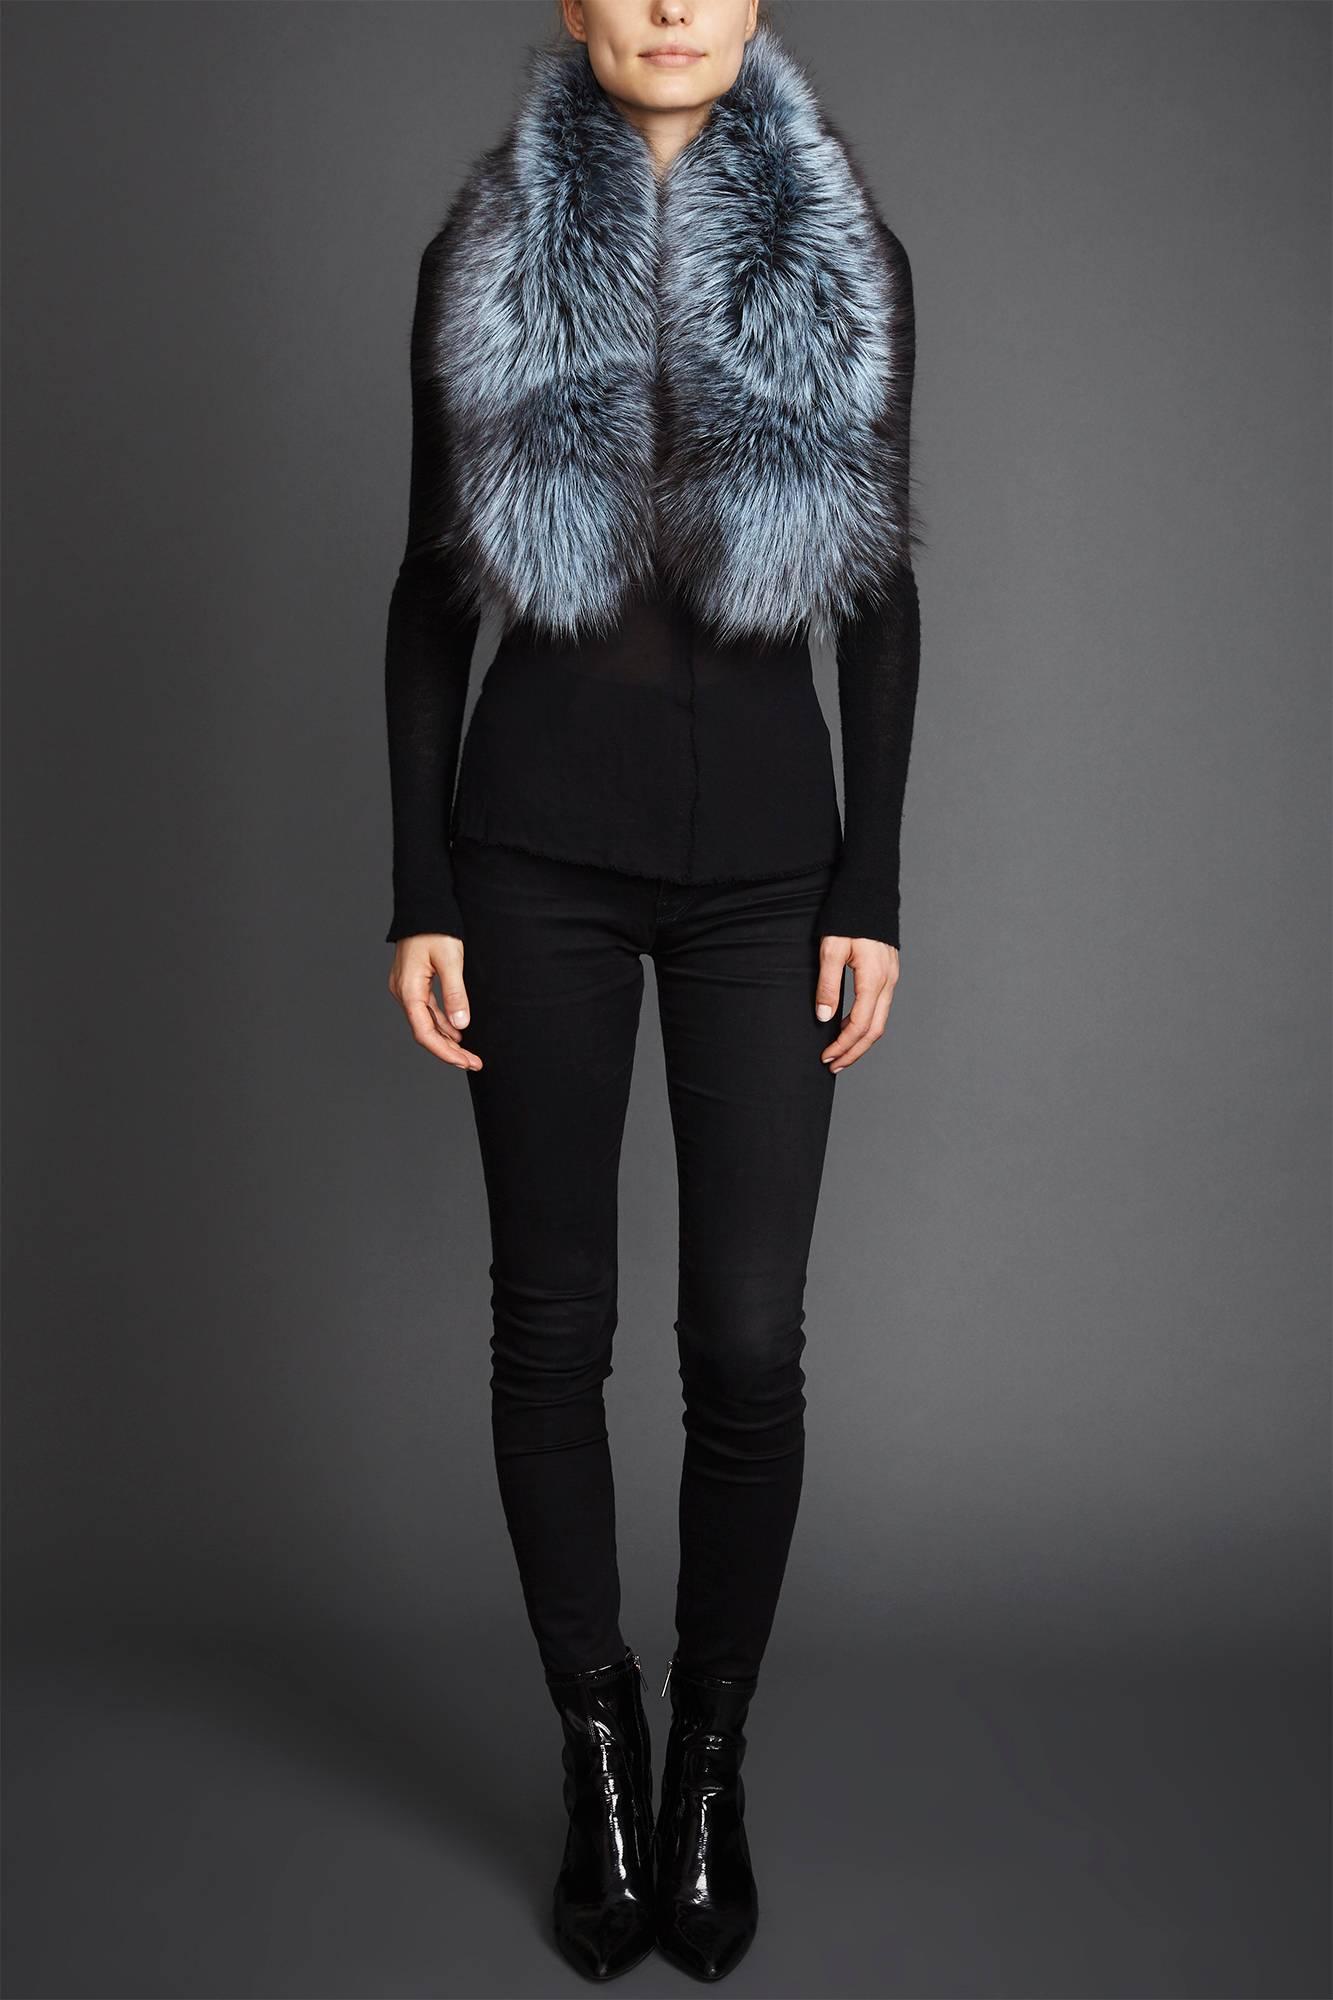 Black Verheyen Lapel Cross-through Collar in Iced Topaz Fox Fur - Brand new 